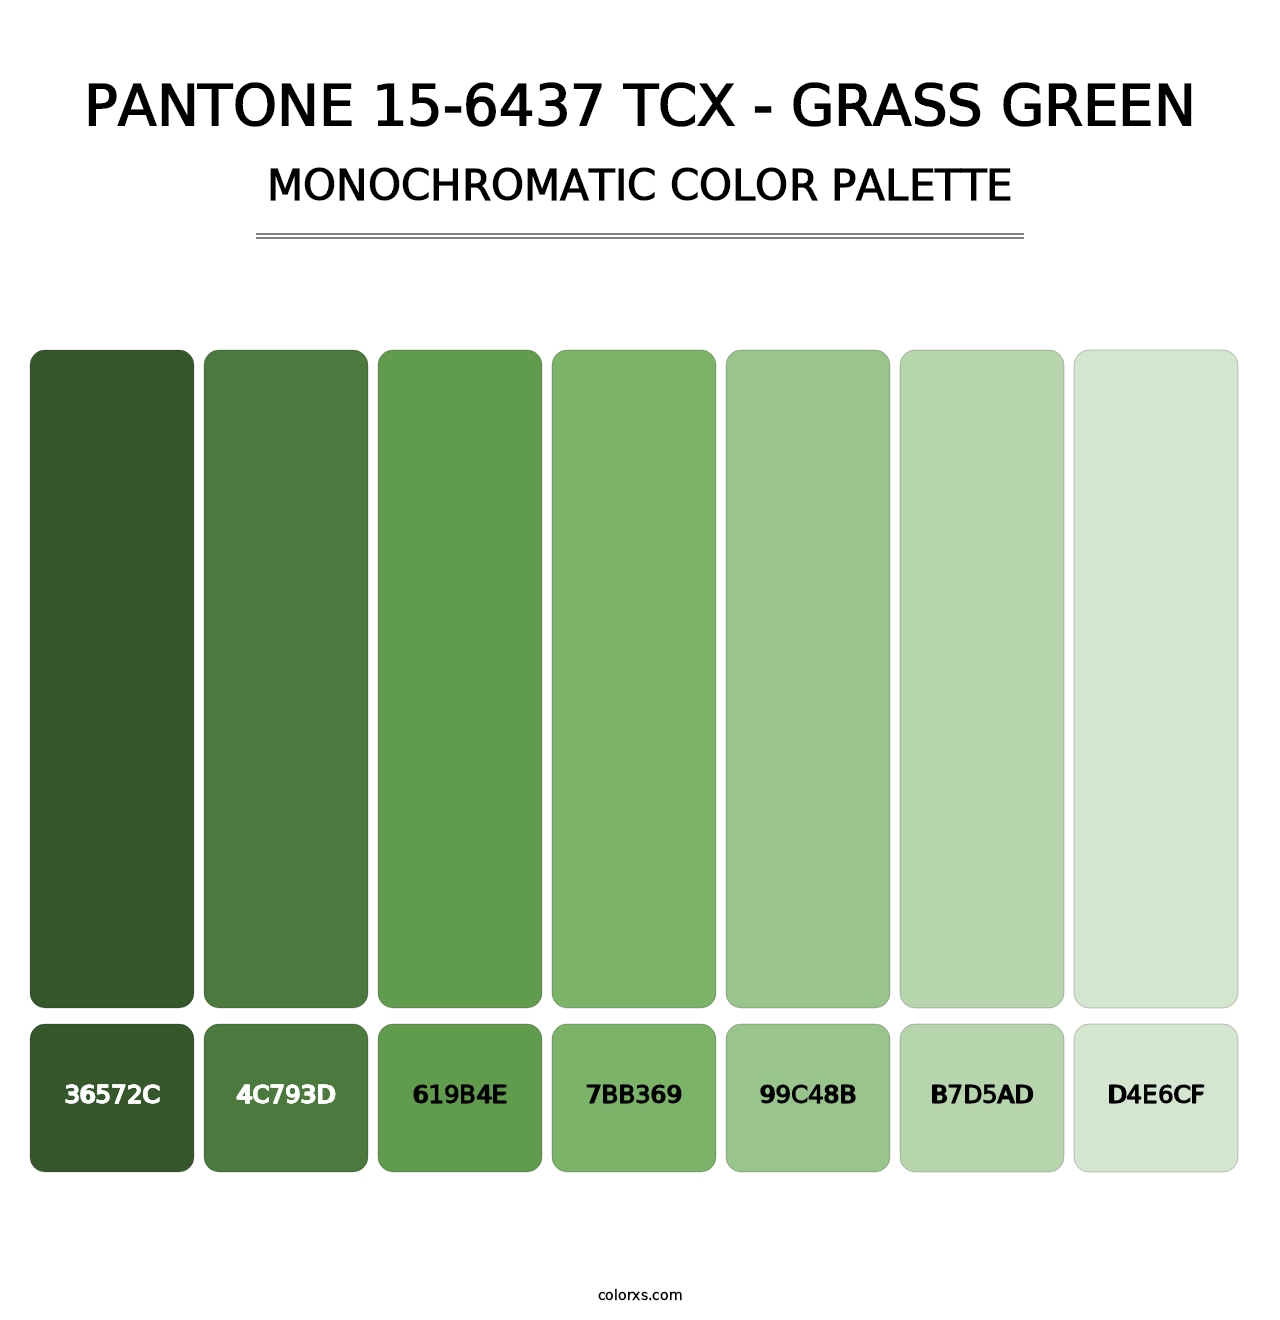 PANTONE 15-6437 TCX - Grass Green - Monochromatic Color Palette